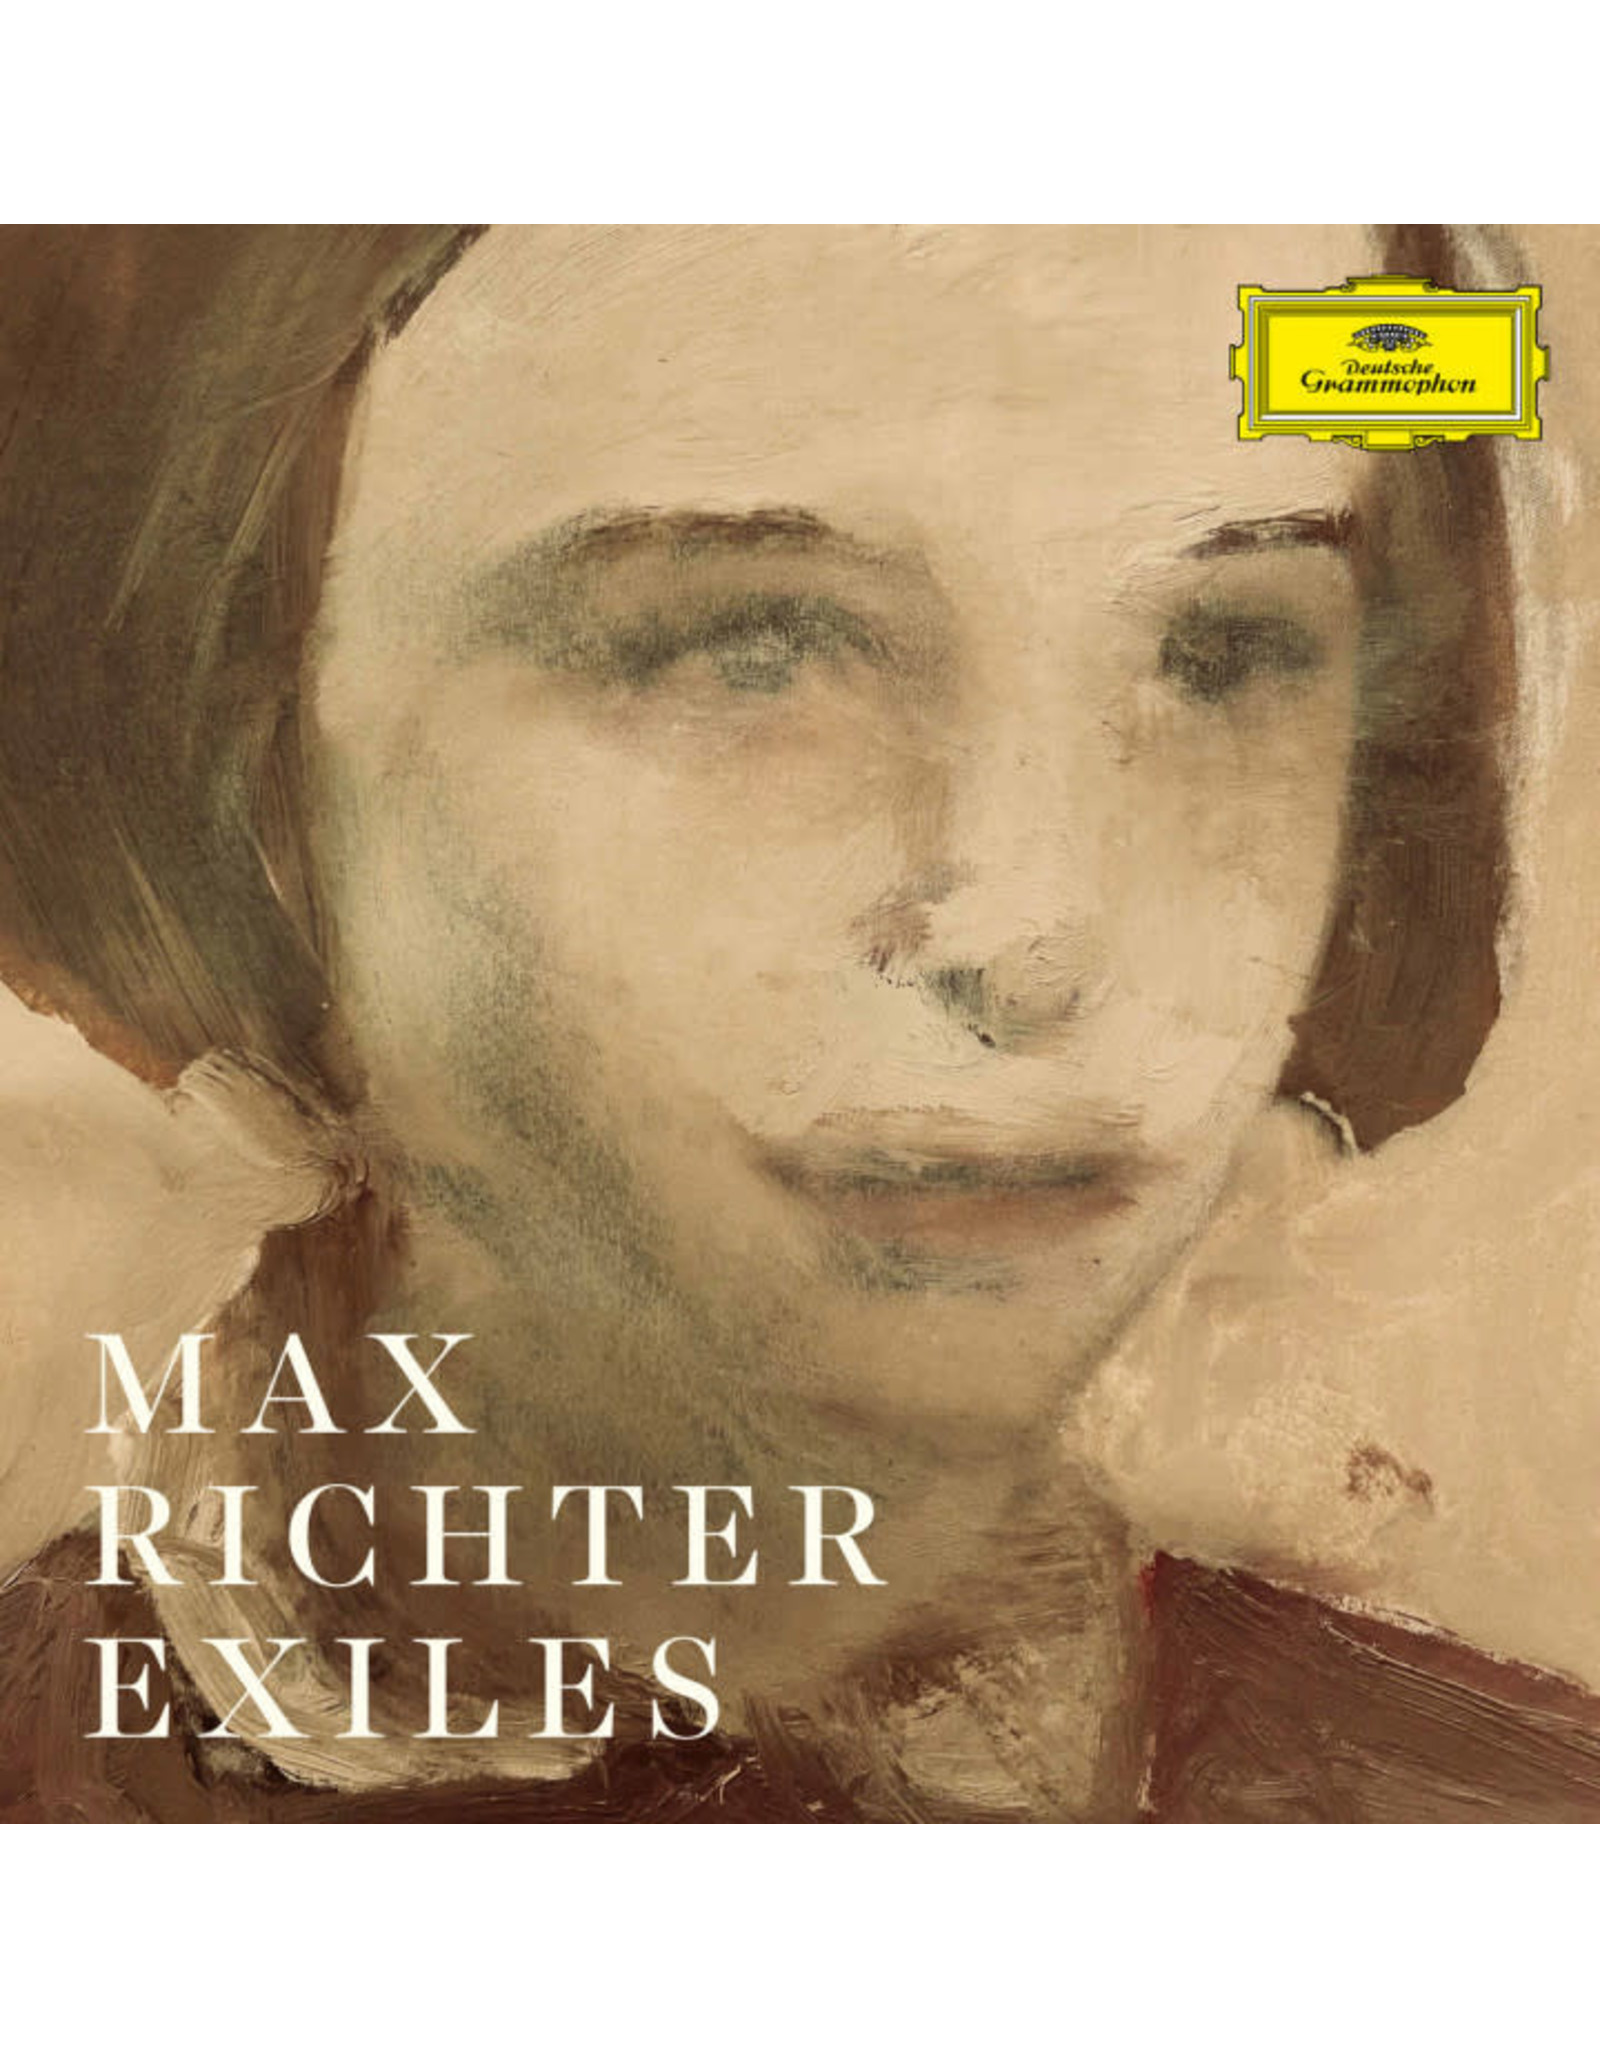 New Vinyl Max Richter - Exiles 2LP